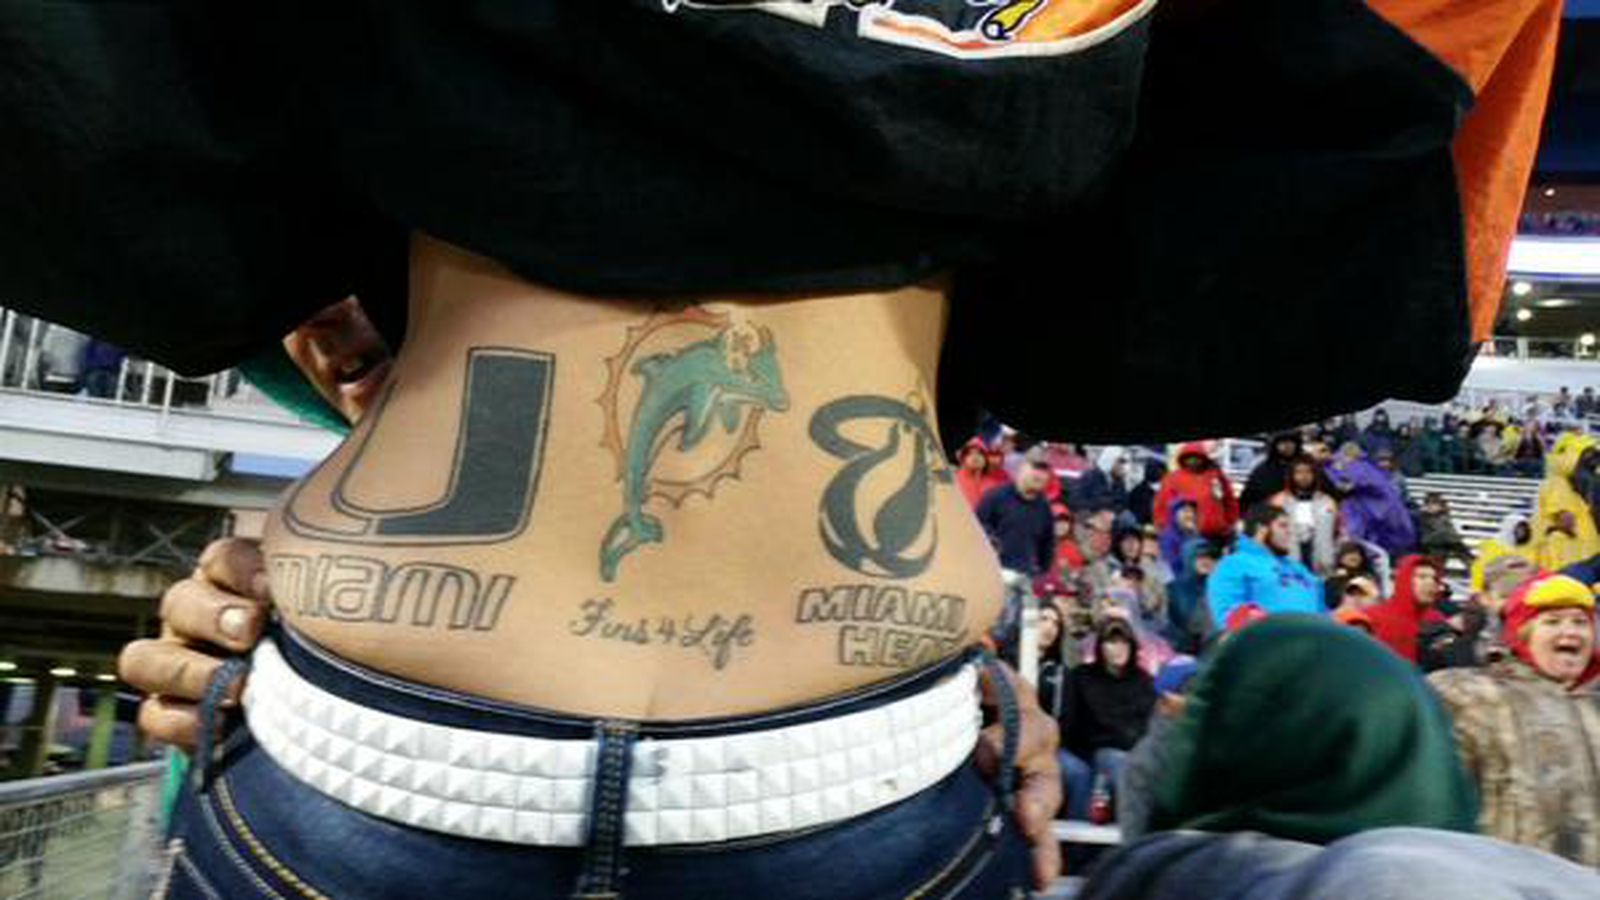 Miami sports fan shows off her 'Champ Stamp' tattoo - SBNation.com